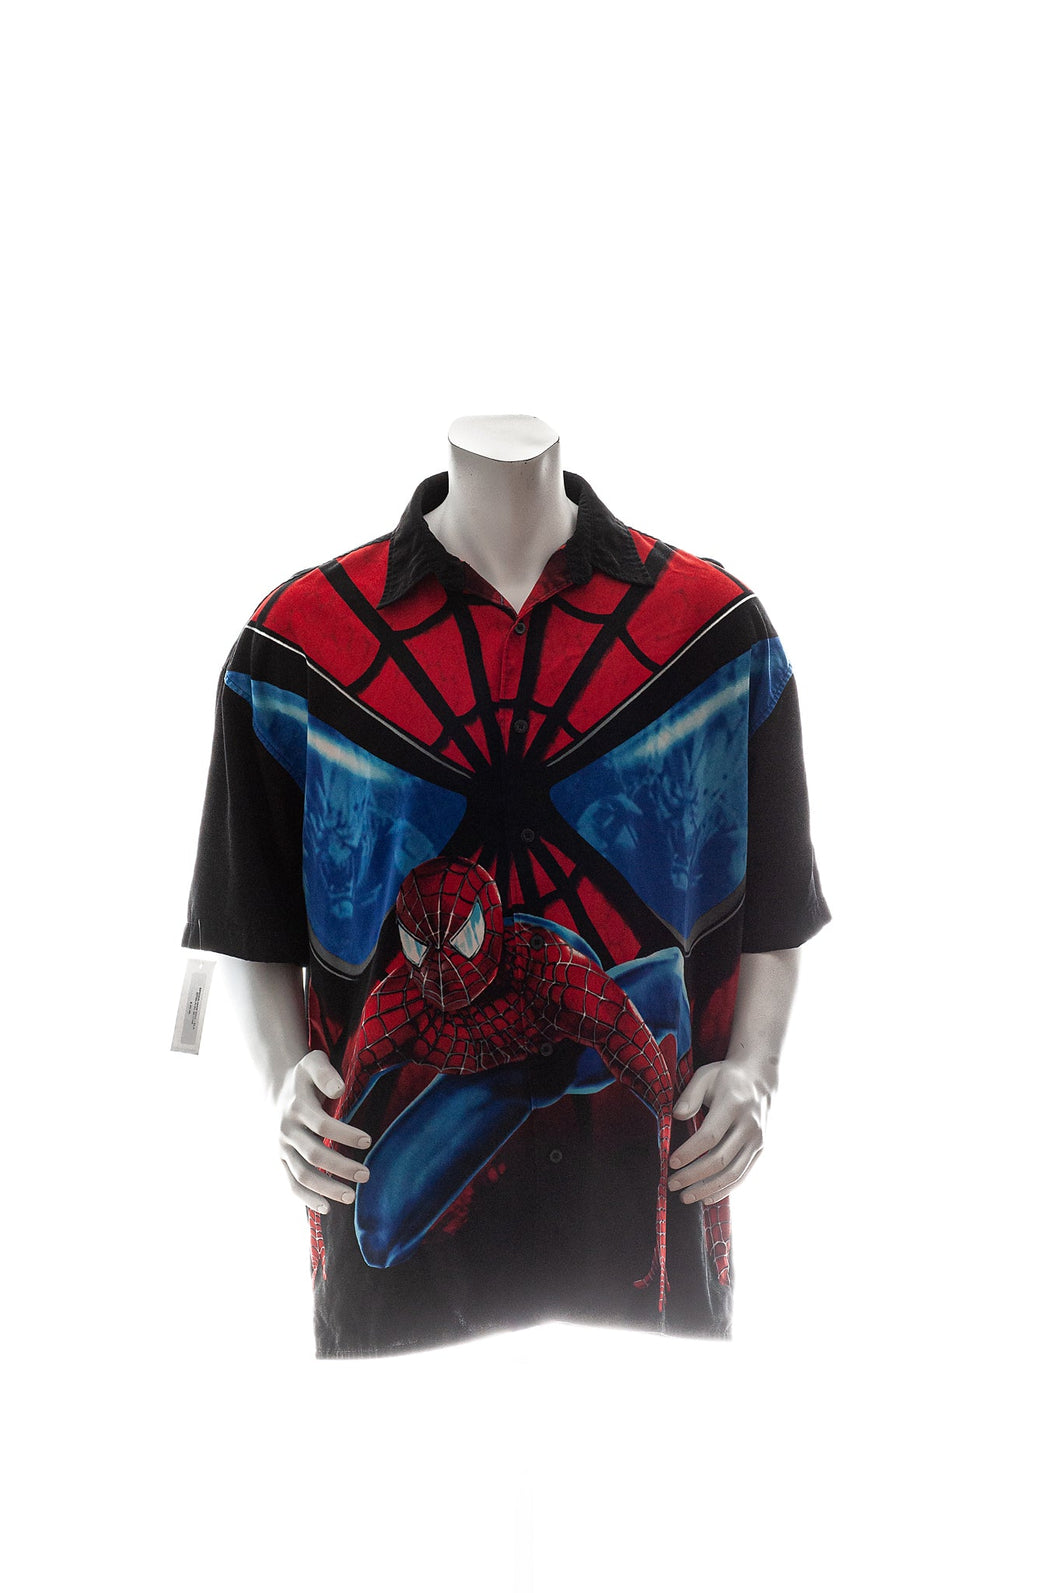 Marvel Spider-Man 2002 All Over Print Button Up Shirt Mens XL